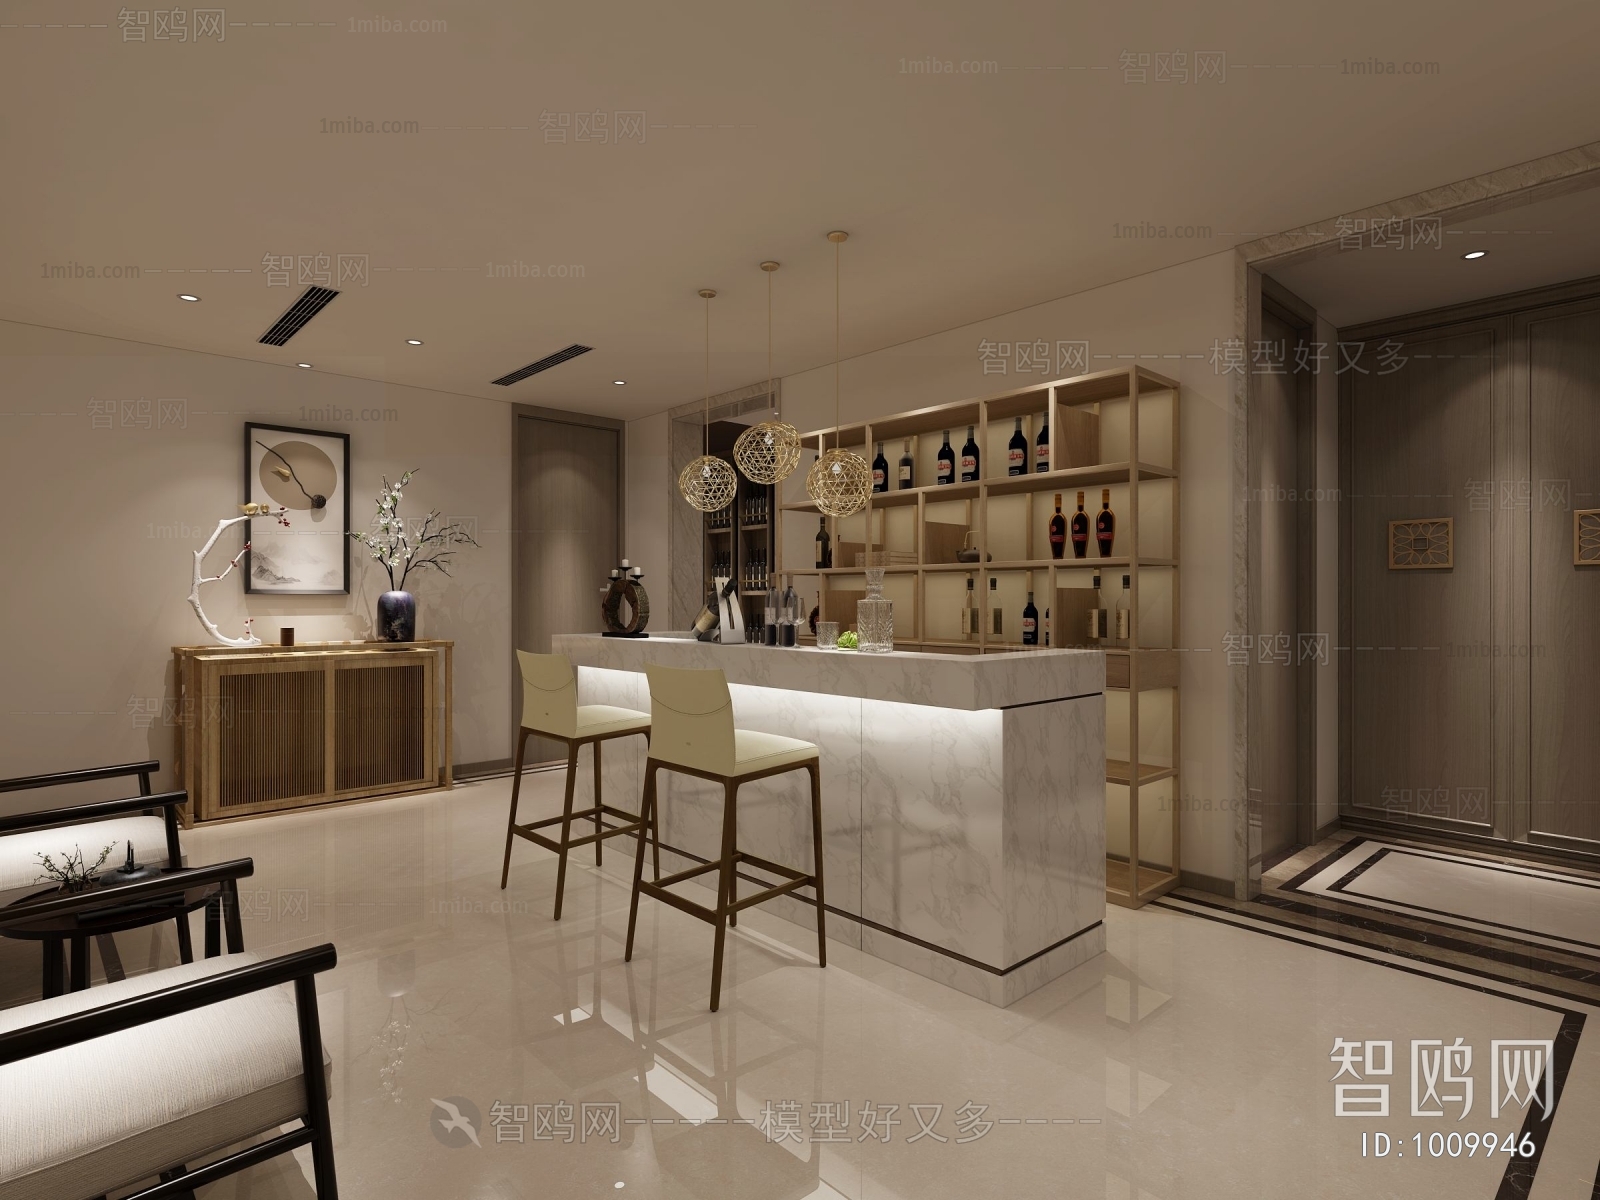 New Chinese Style Wine Cellar/Wine Tasting Room